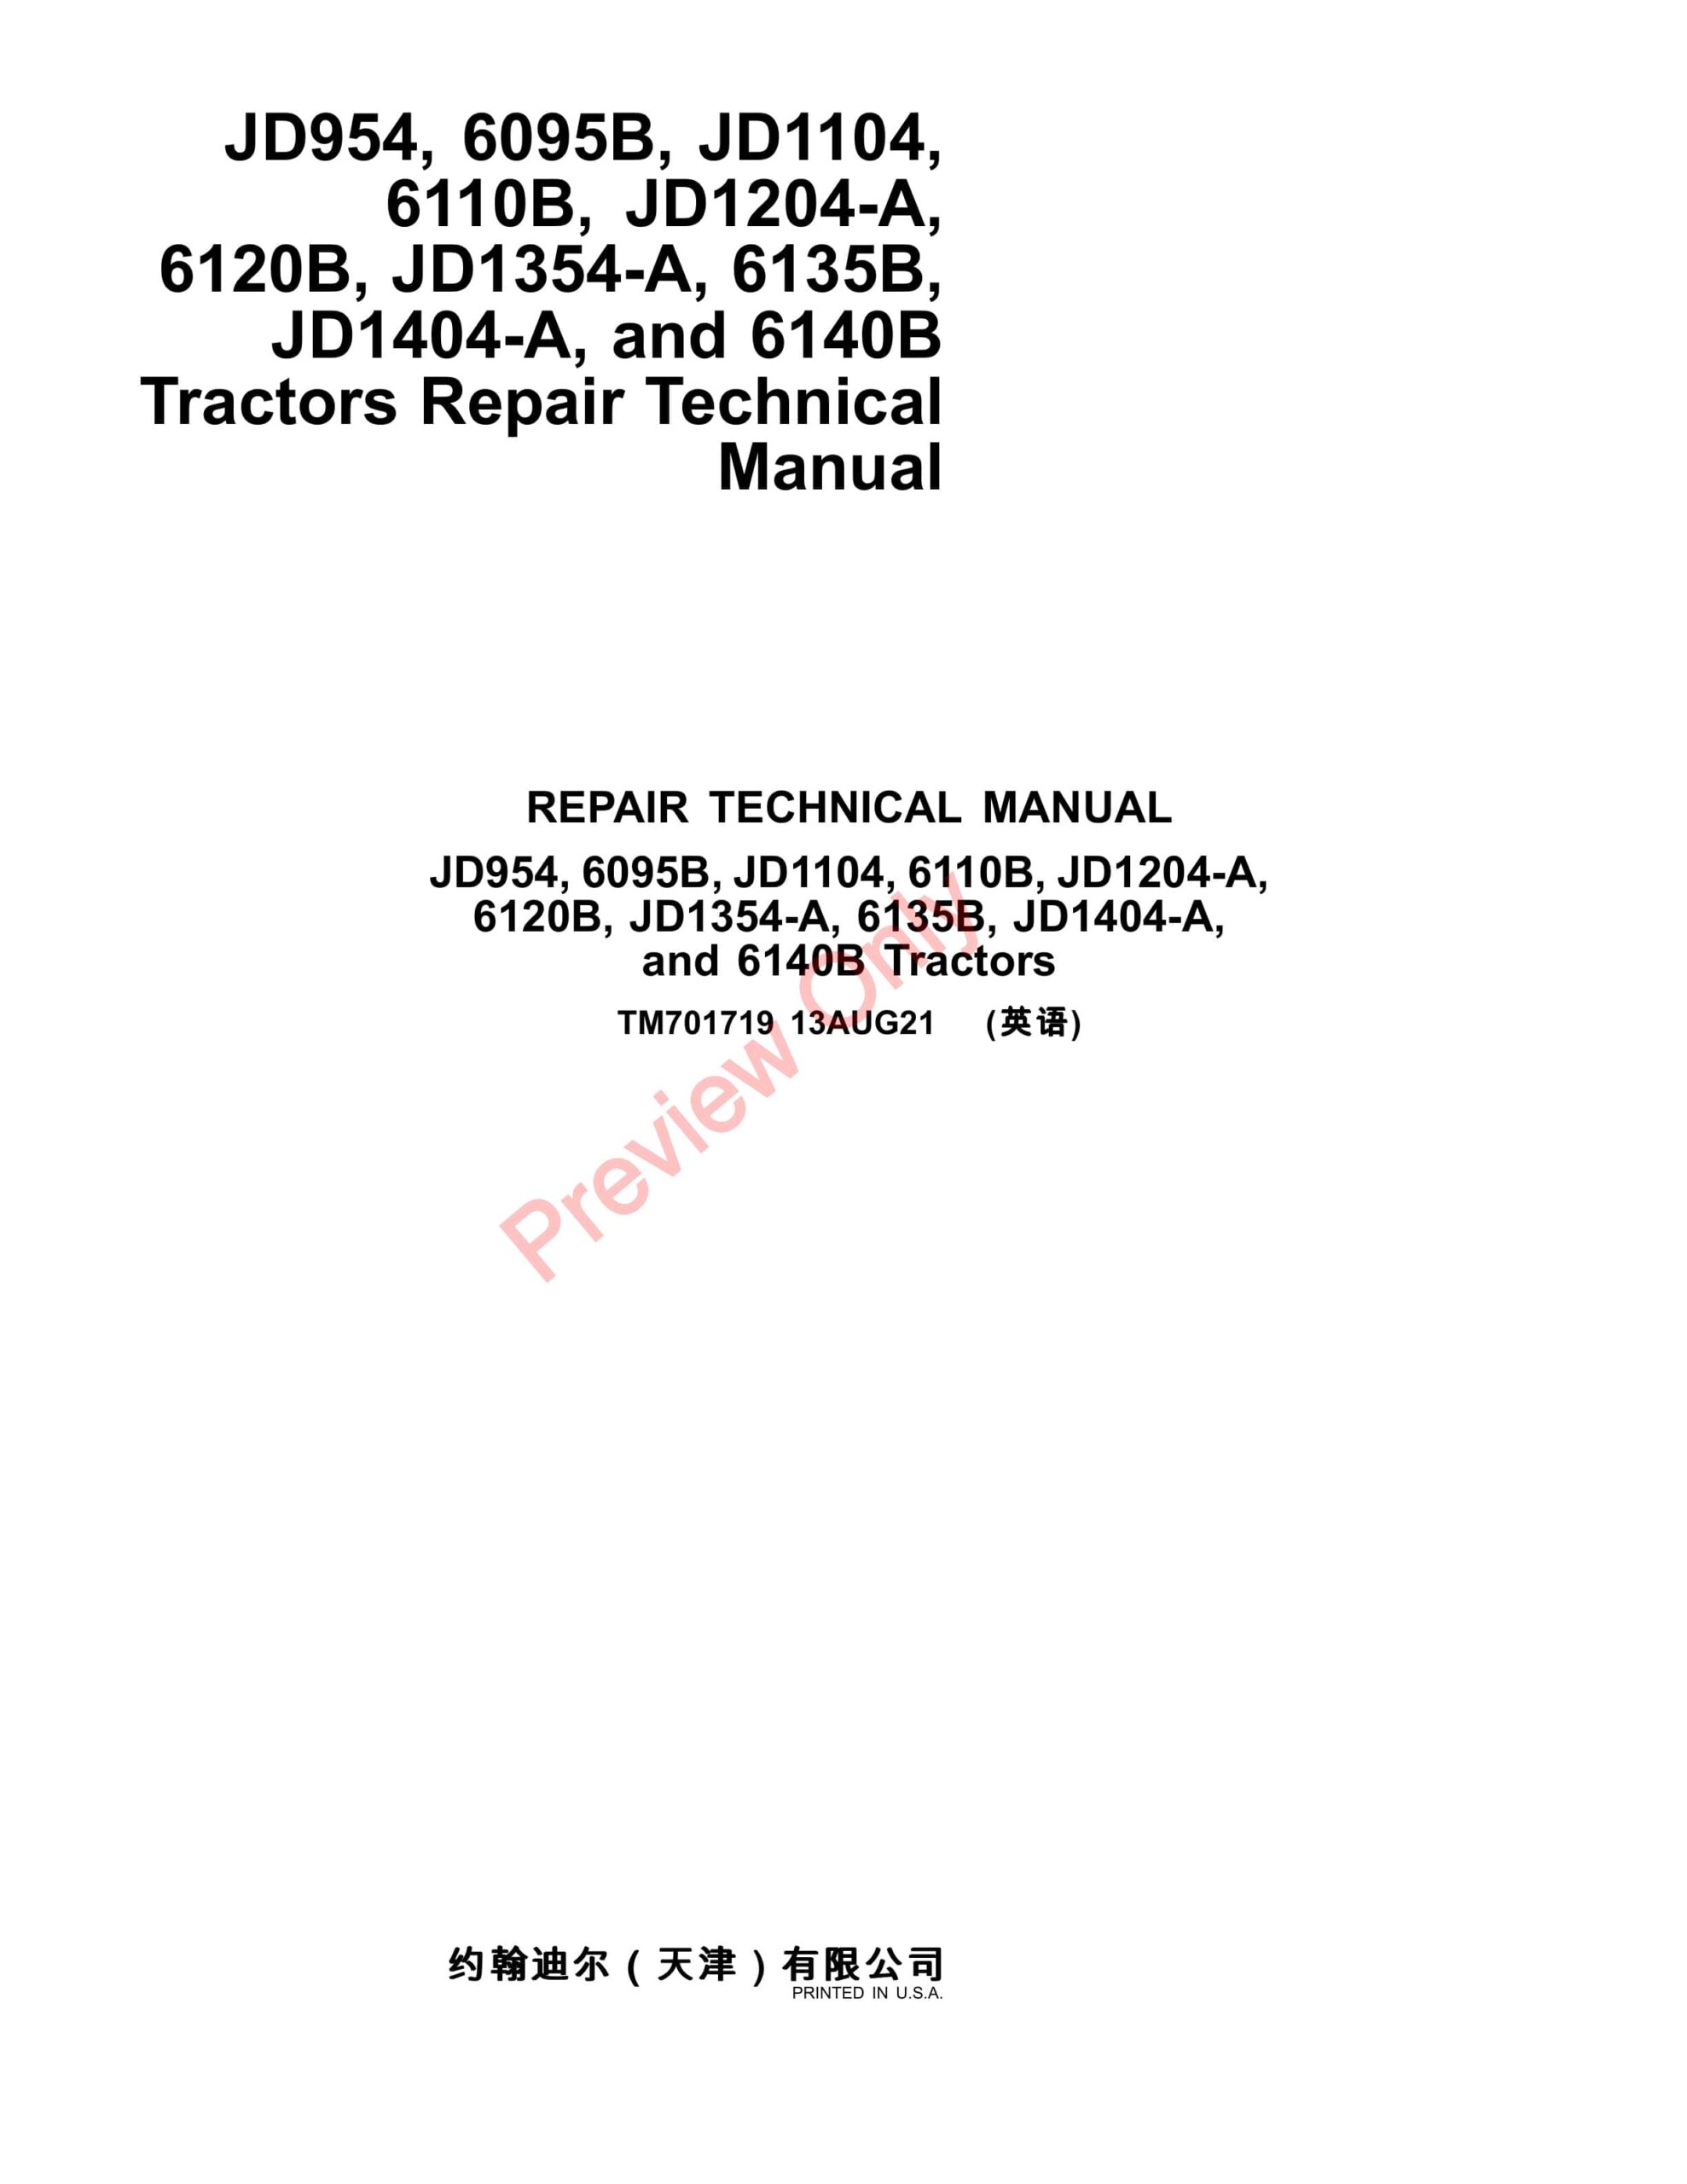 John Deere JD954, 6095B, JD1104, 6110B, JD1204 Repair Technical Manual TM701719 13AUG21-1